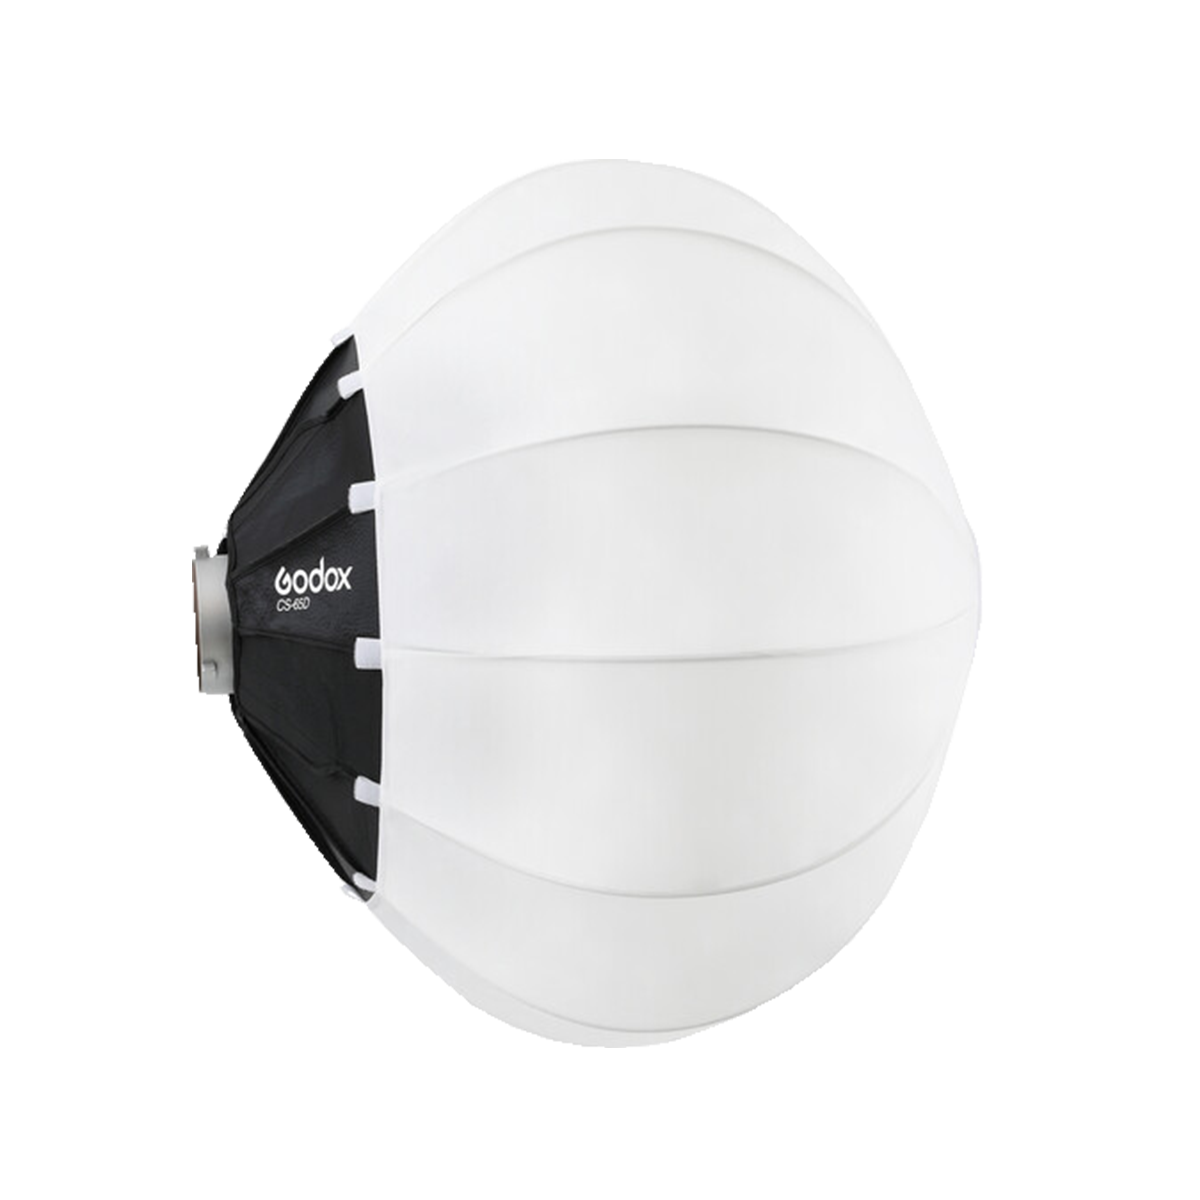 CS-65D 65cm Collapsible Lantern Softbox